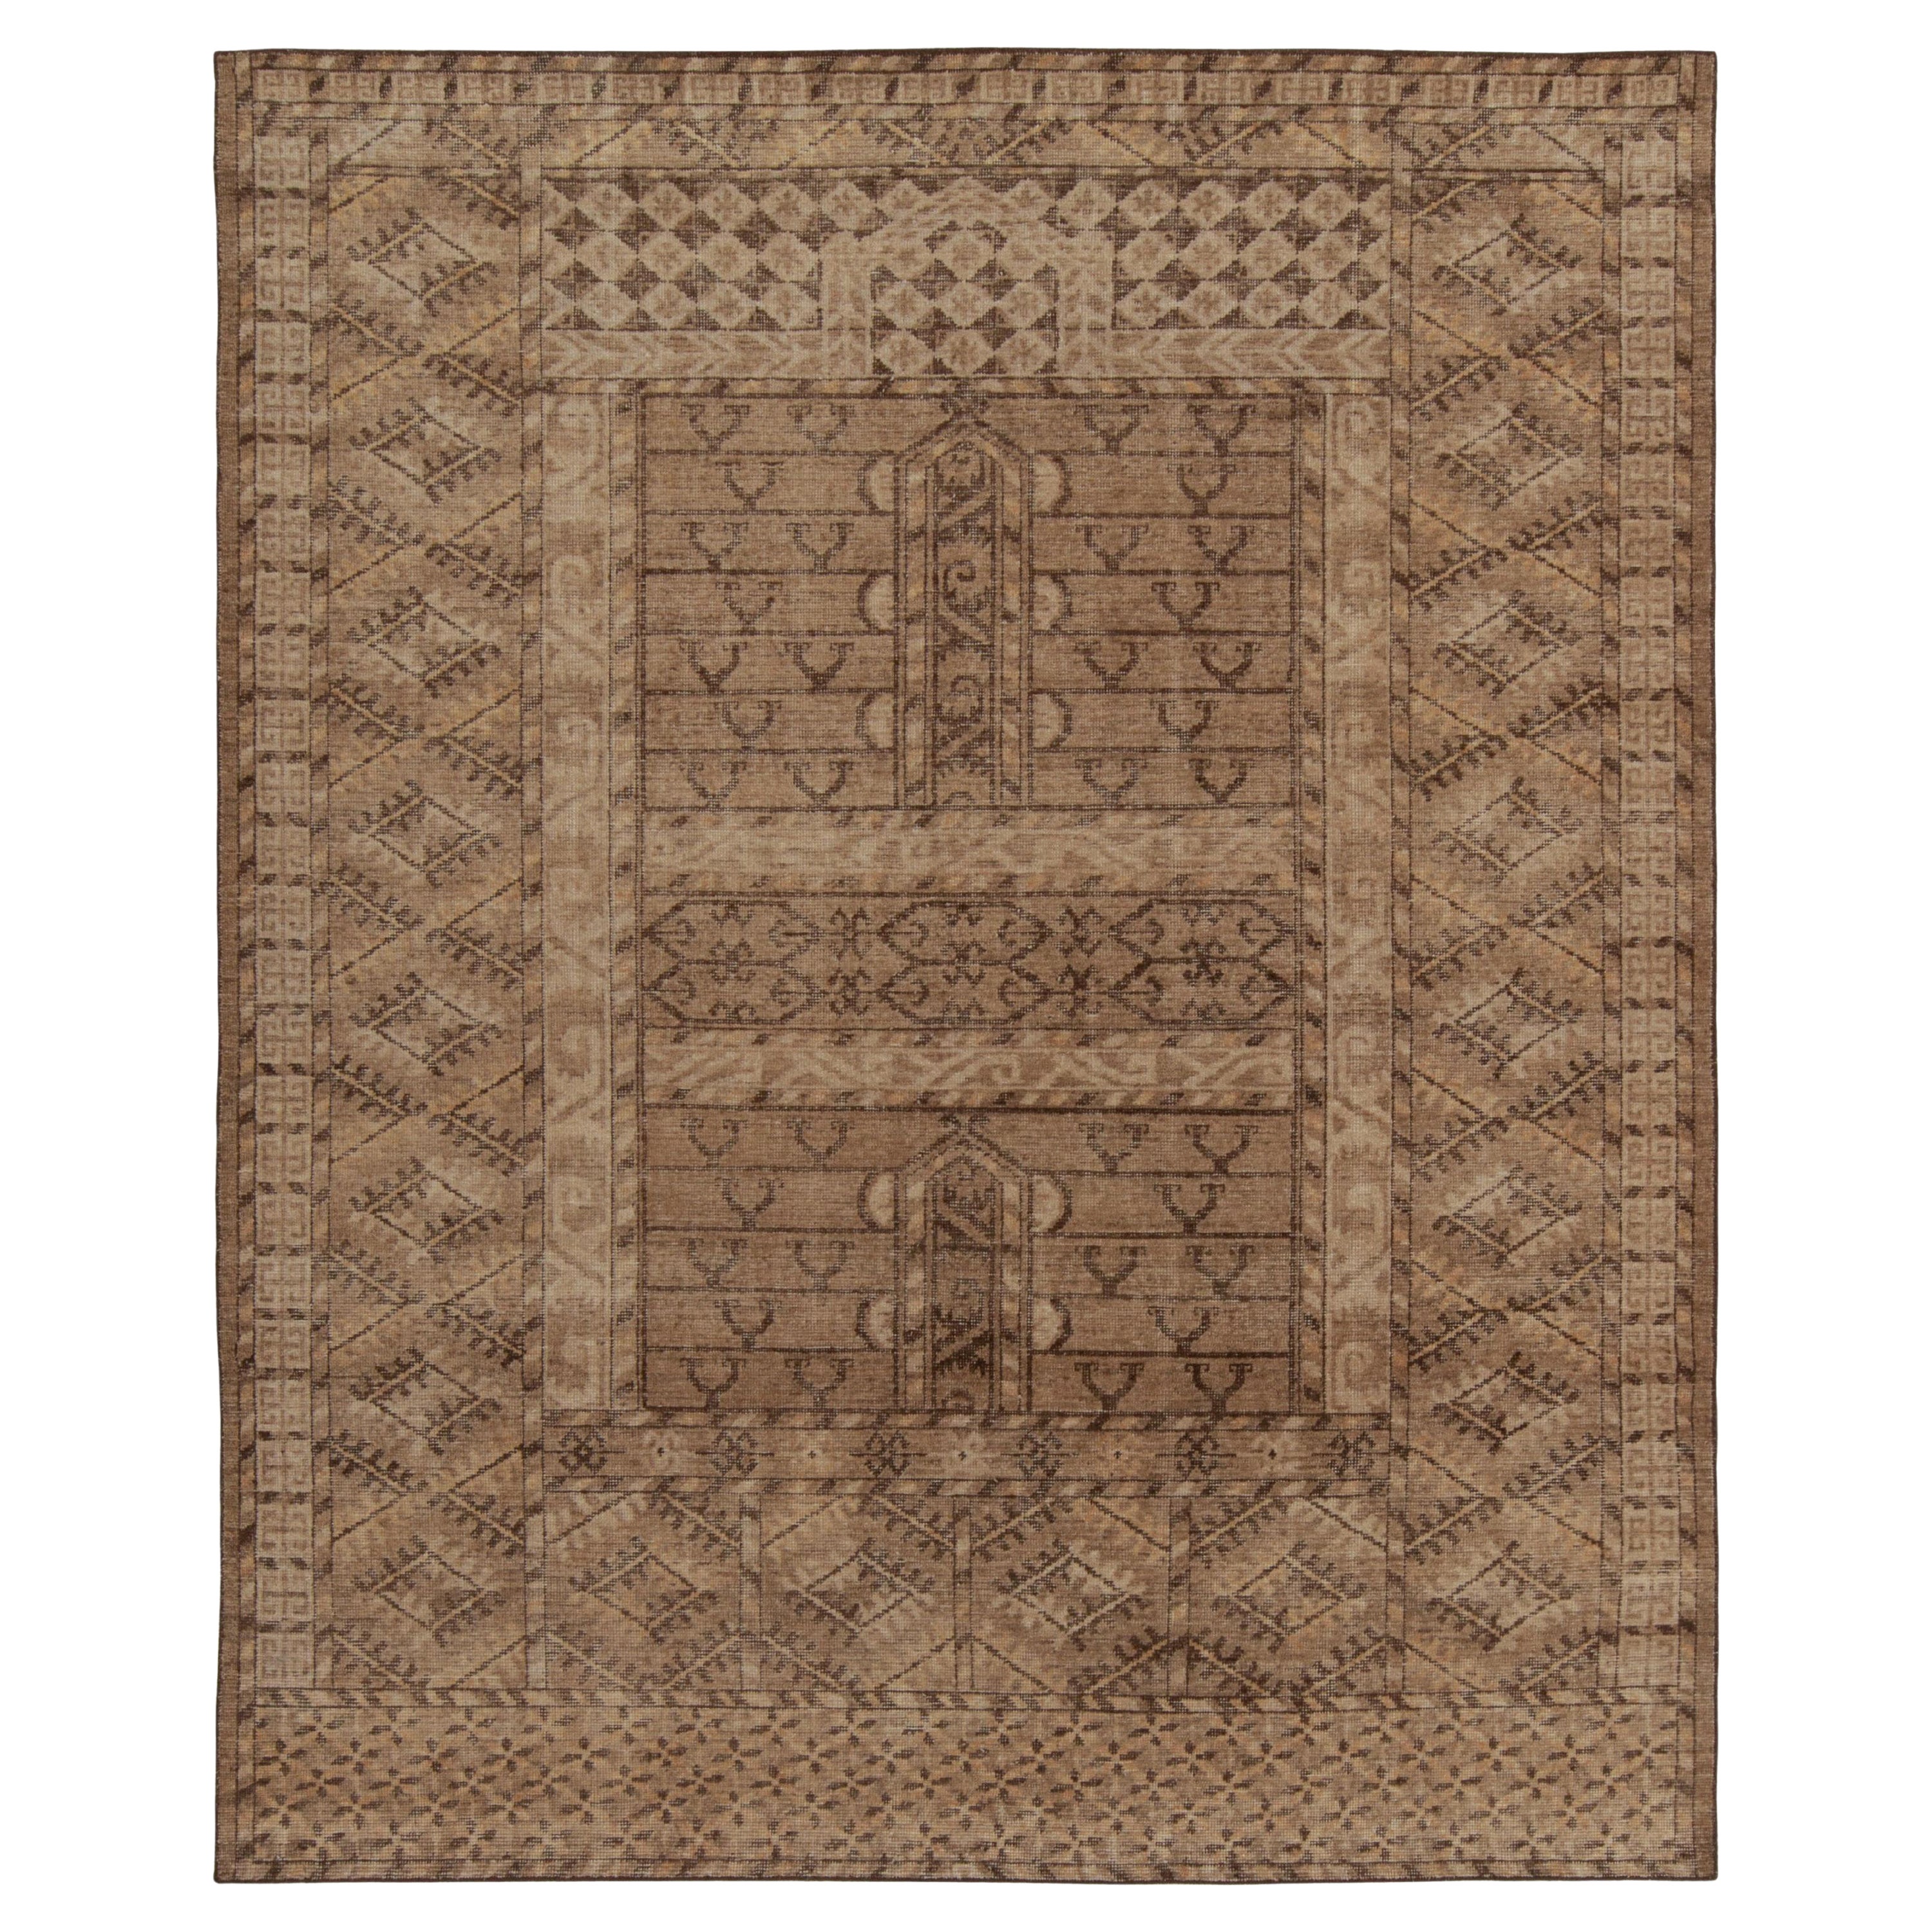 Rug & Kilim's Distressed Style Rug in Beige & Brown Tribal Patterns (tapis à motifs tribaux)